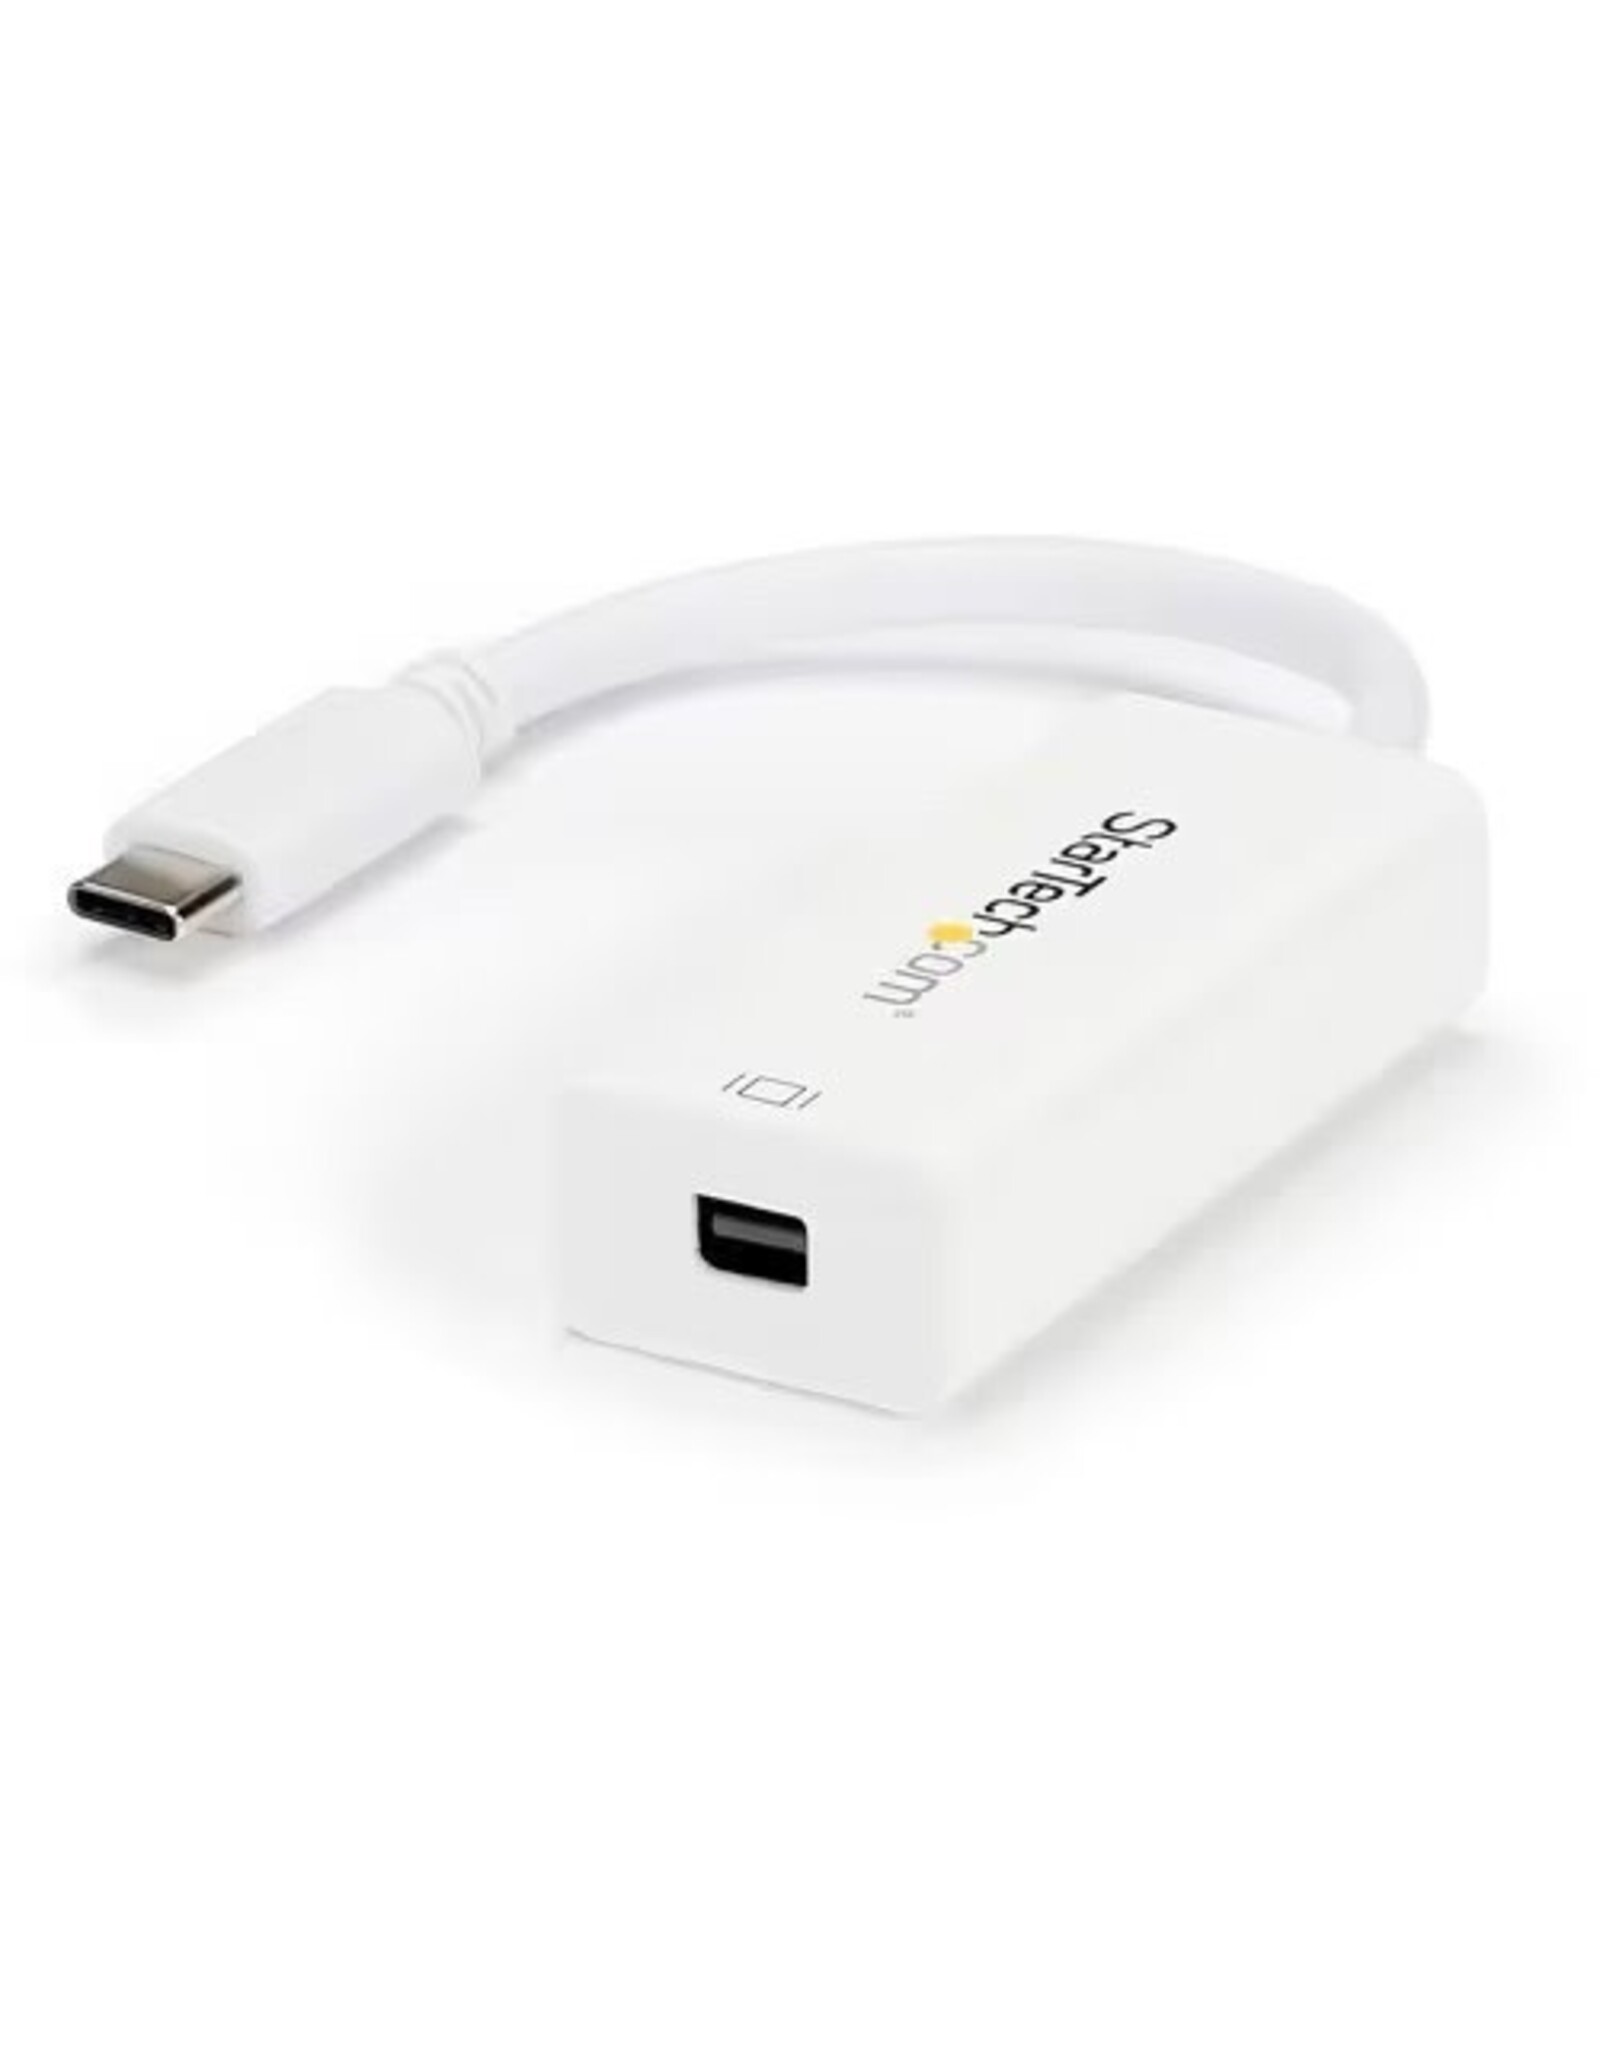 Startech StarTech USB-C to Mini DisplayPort Adapter - 4K 60Hz - White - USB Type-C to Mini DP Adapter